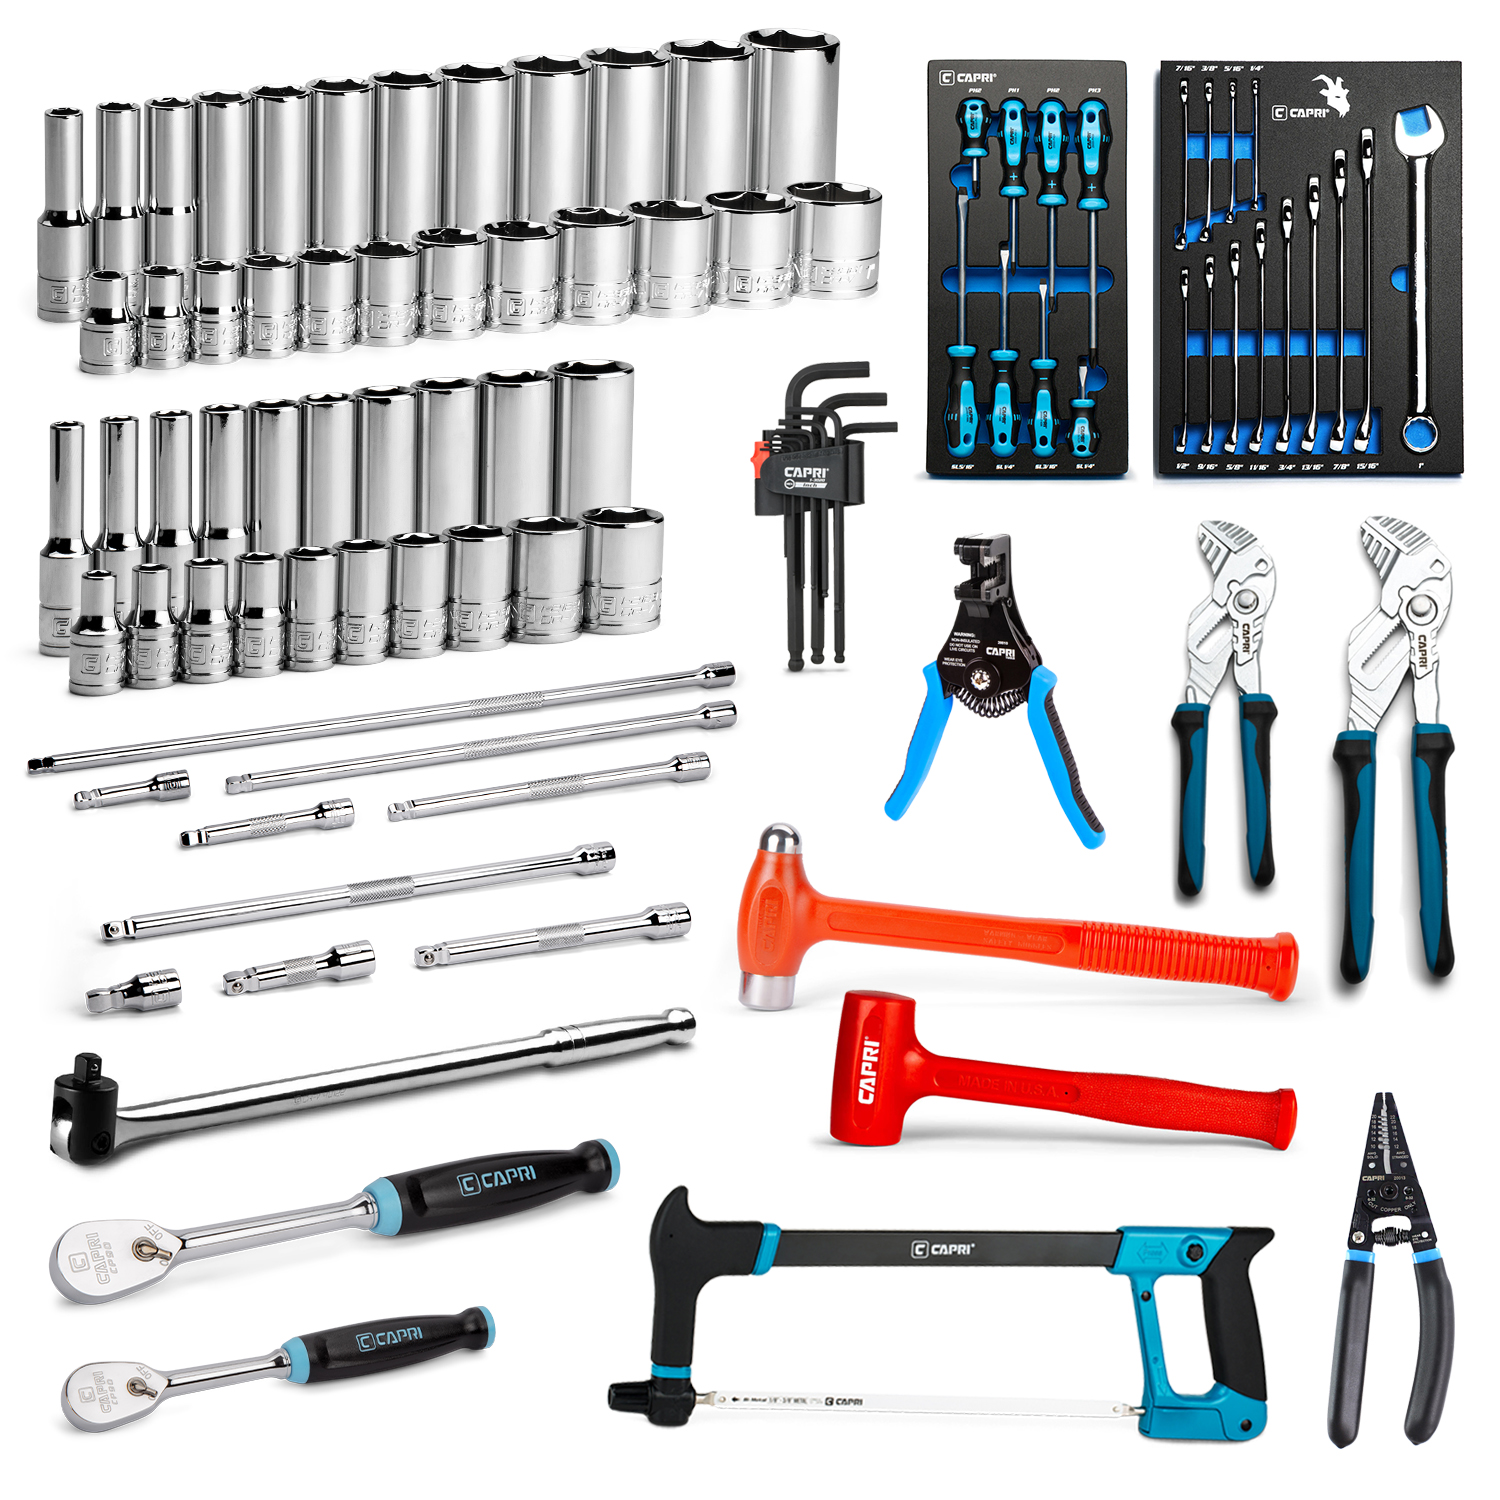 Capri Tools Apprentice Mechanics Tool Set, 93-Piece, SAE with 6-Point Sockets